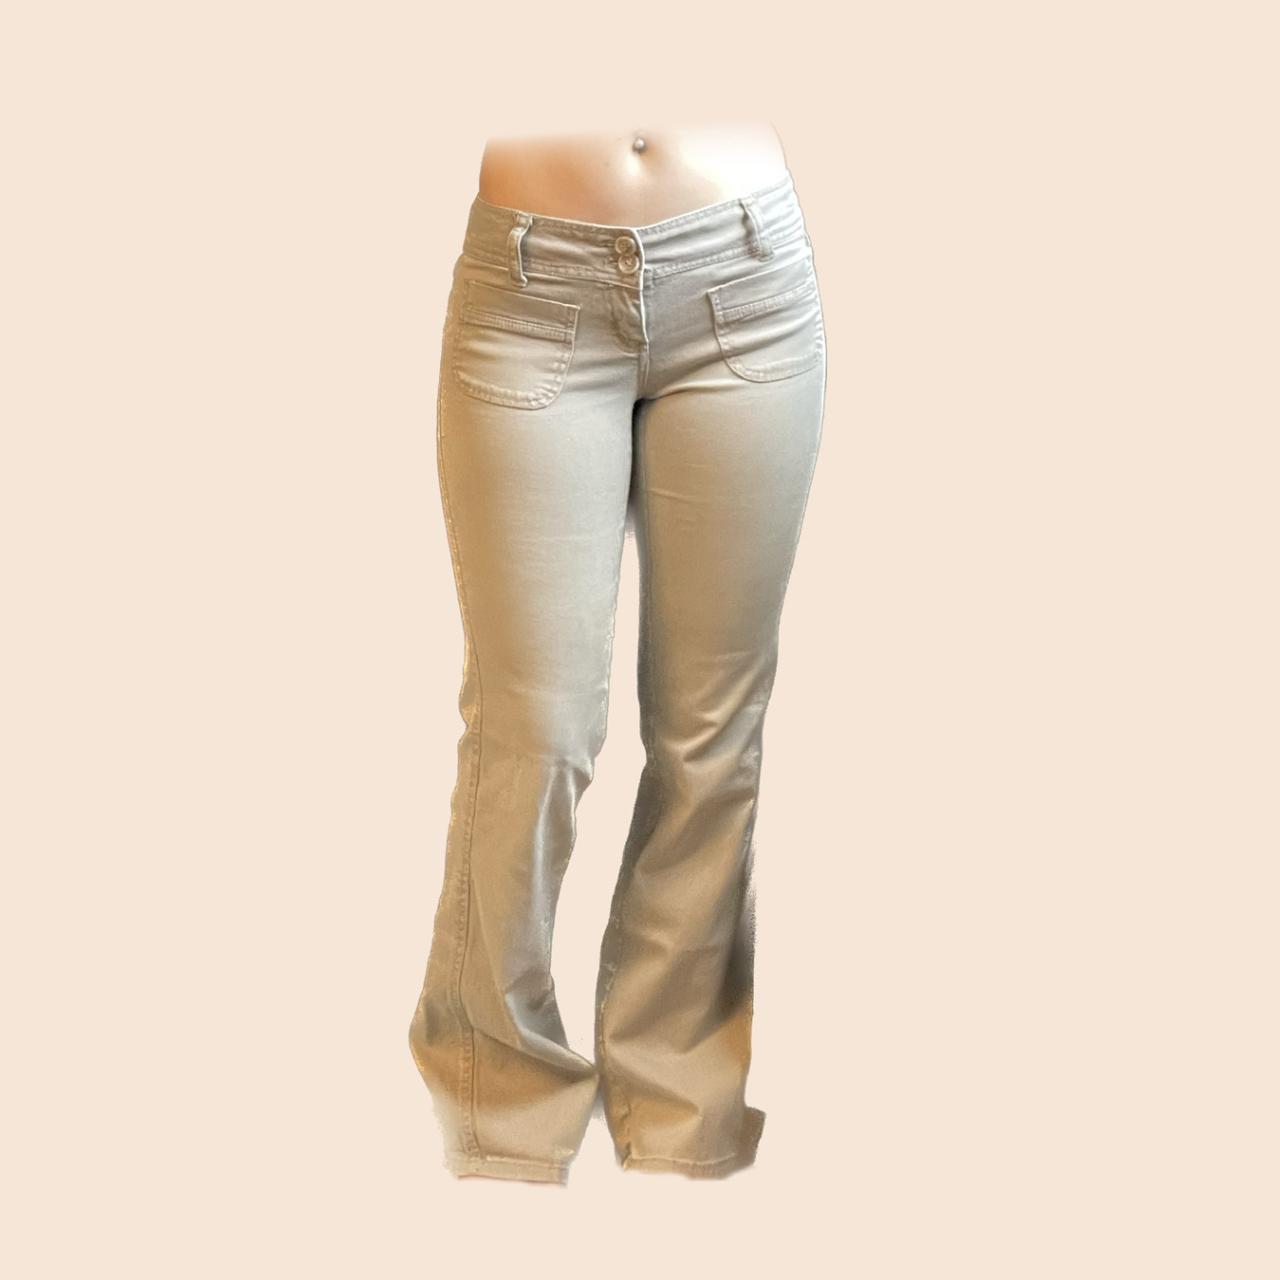 BeBop Women's Tan Jeans